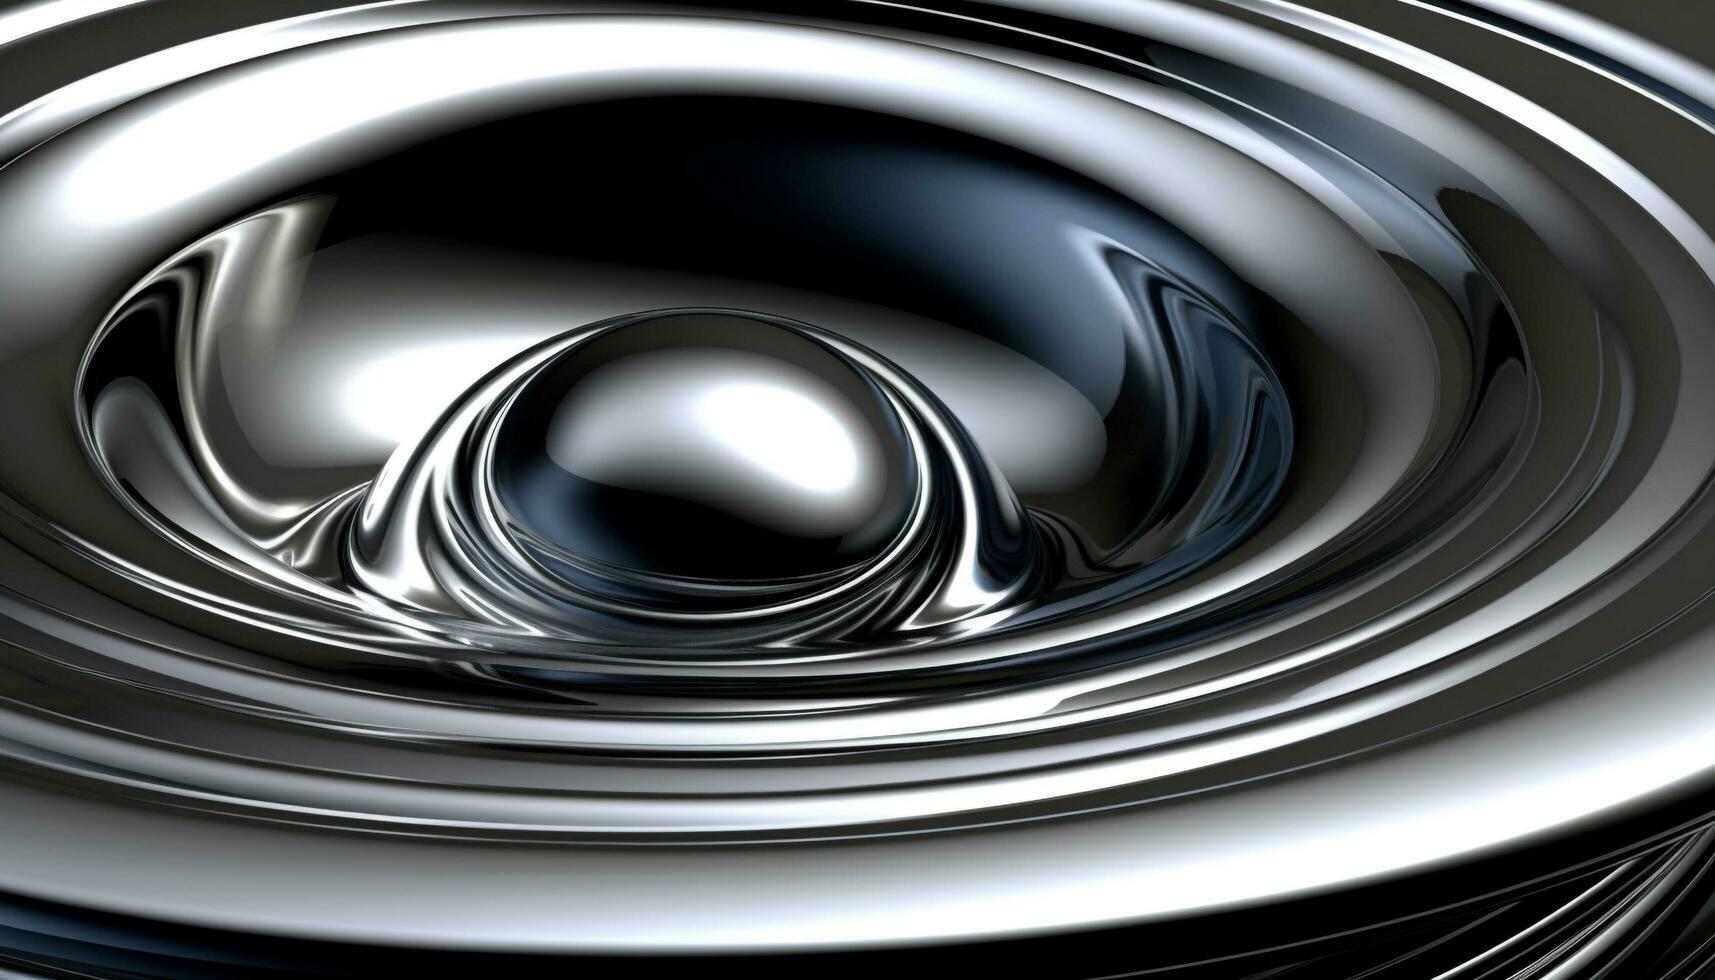 Metallic vortex decoration creates clean rippled whirlpool in futuristic design generated by AI photo